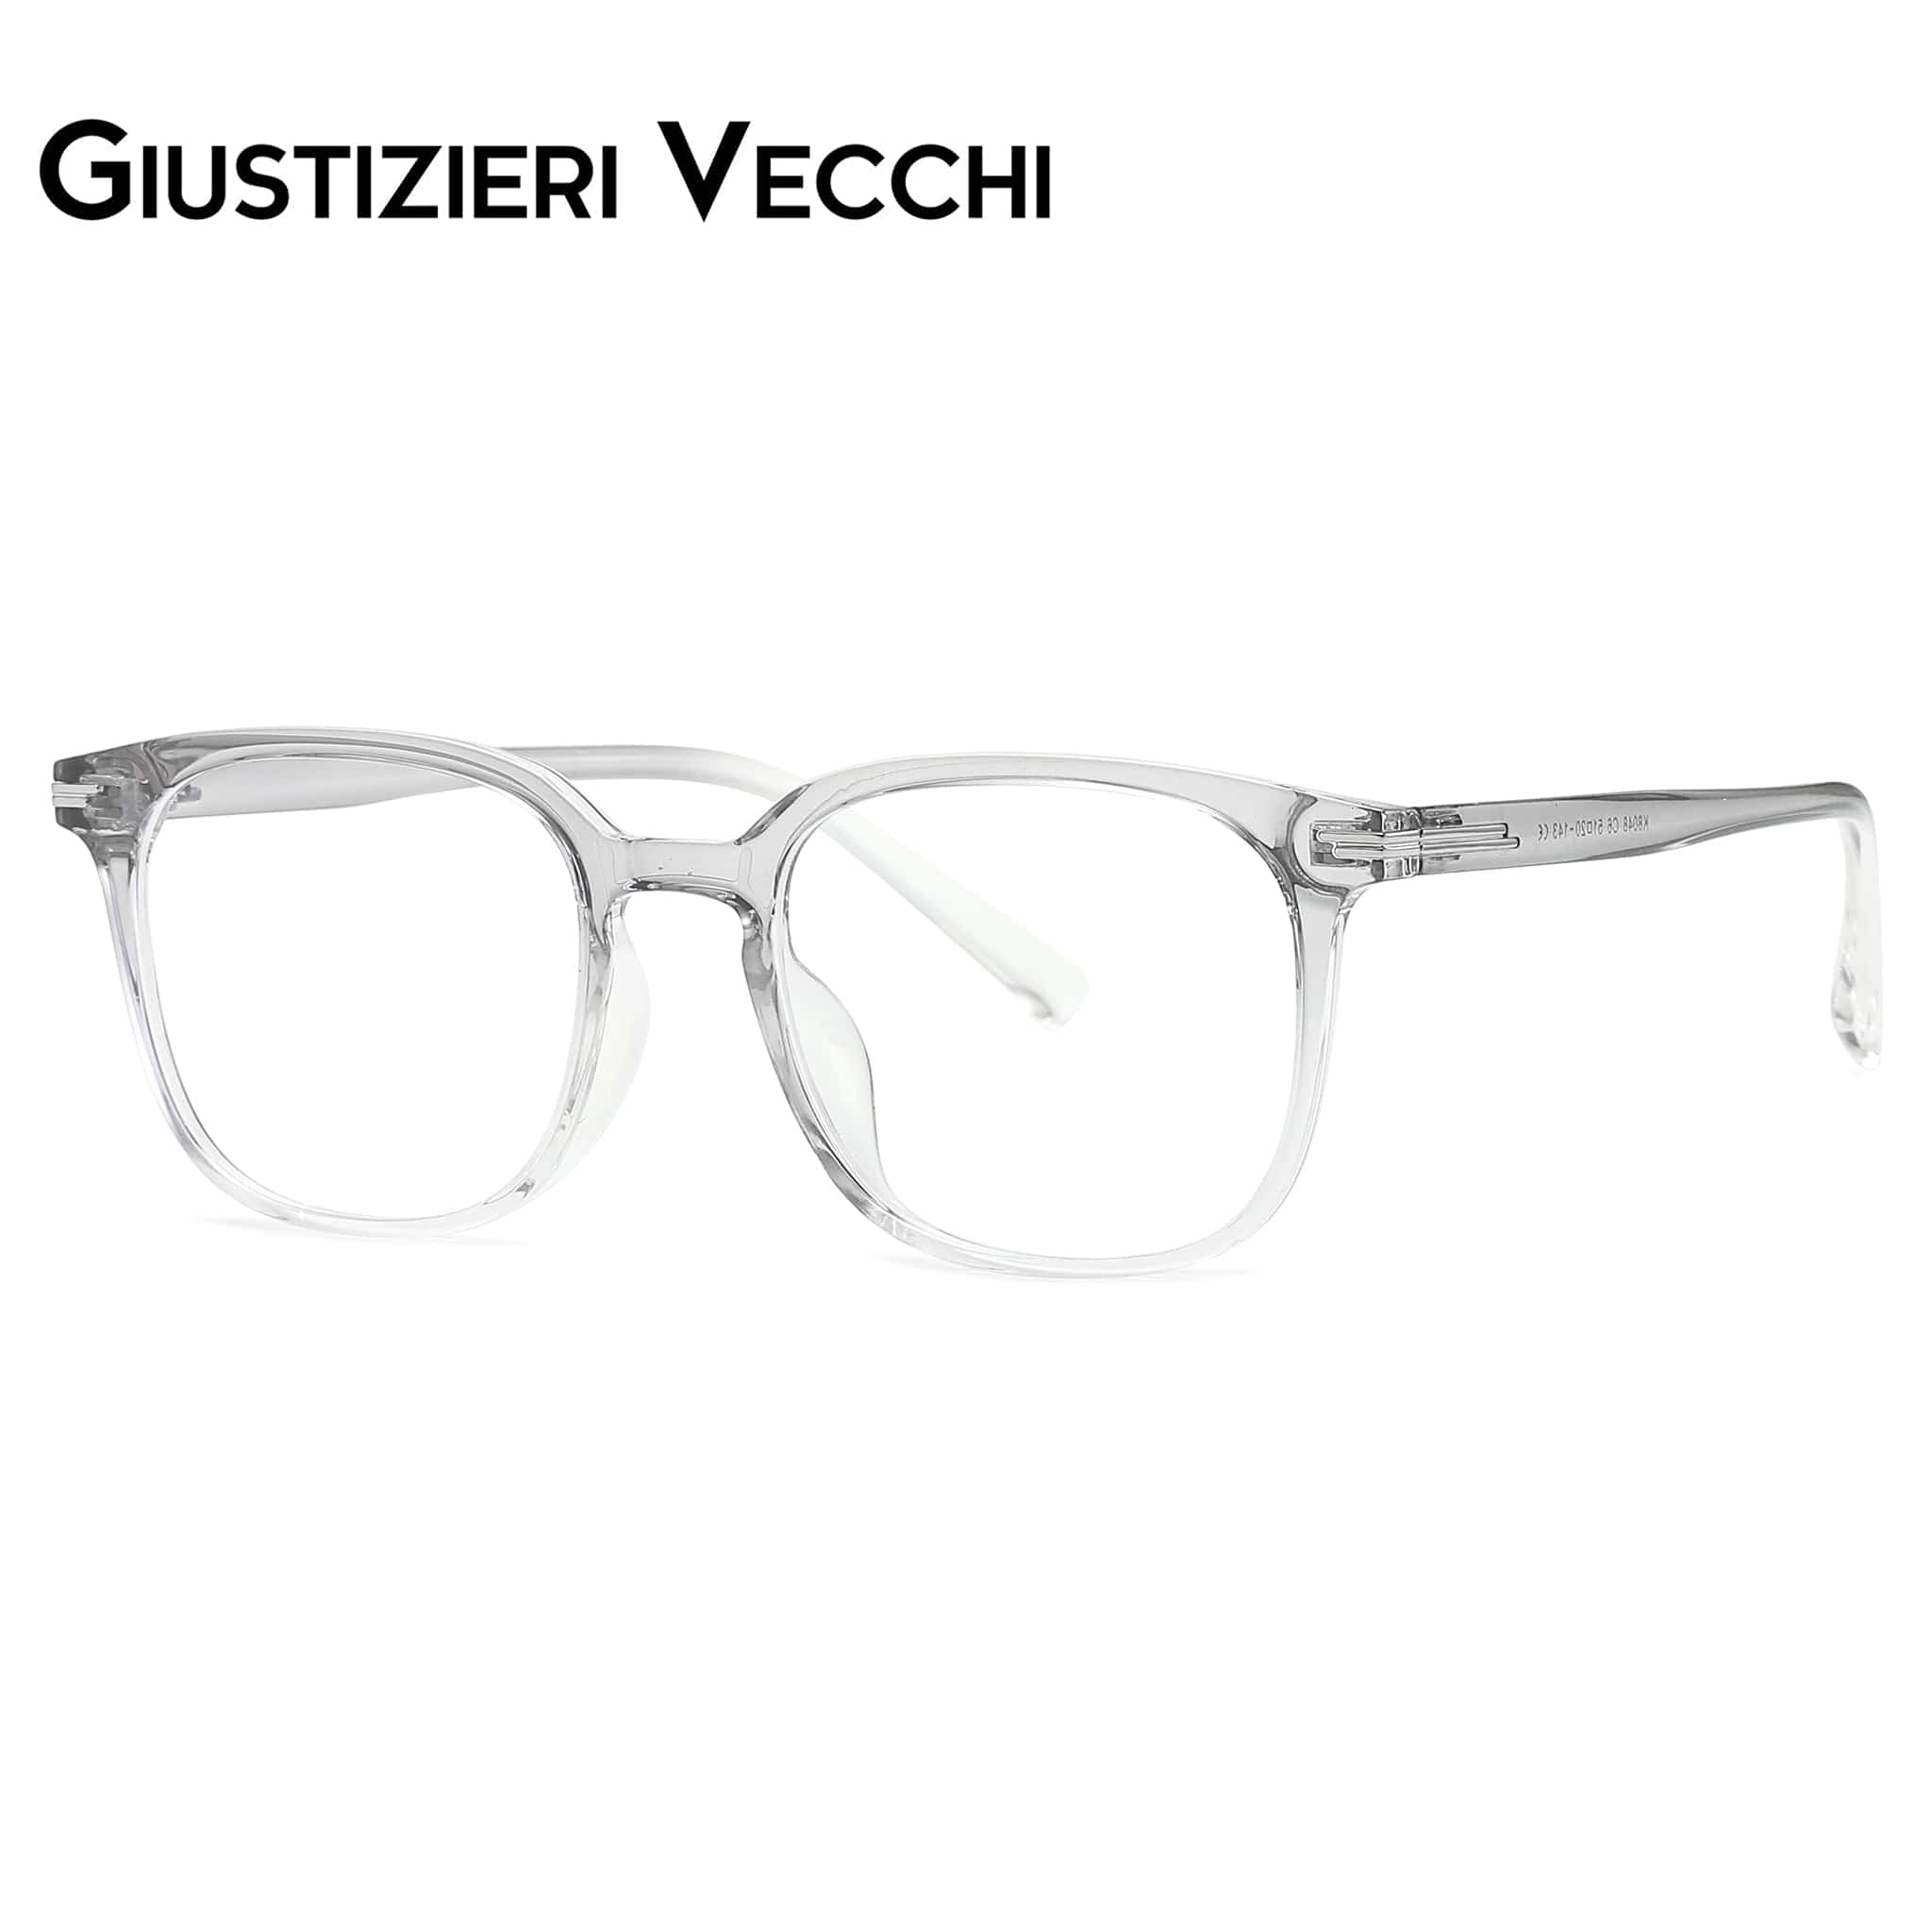 GIUSTIZIERI VECCHI Eyeglasses SkyBloom Duo